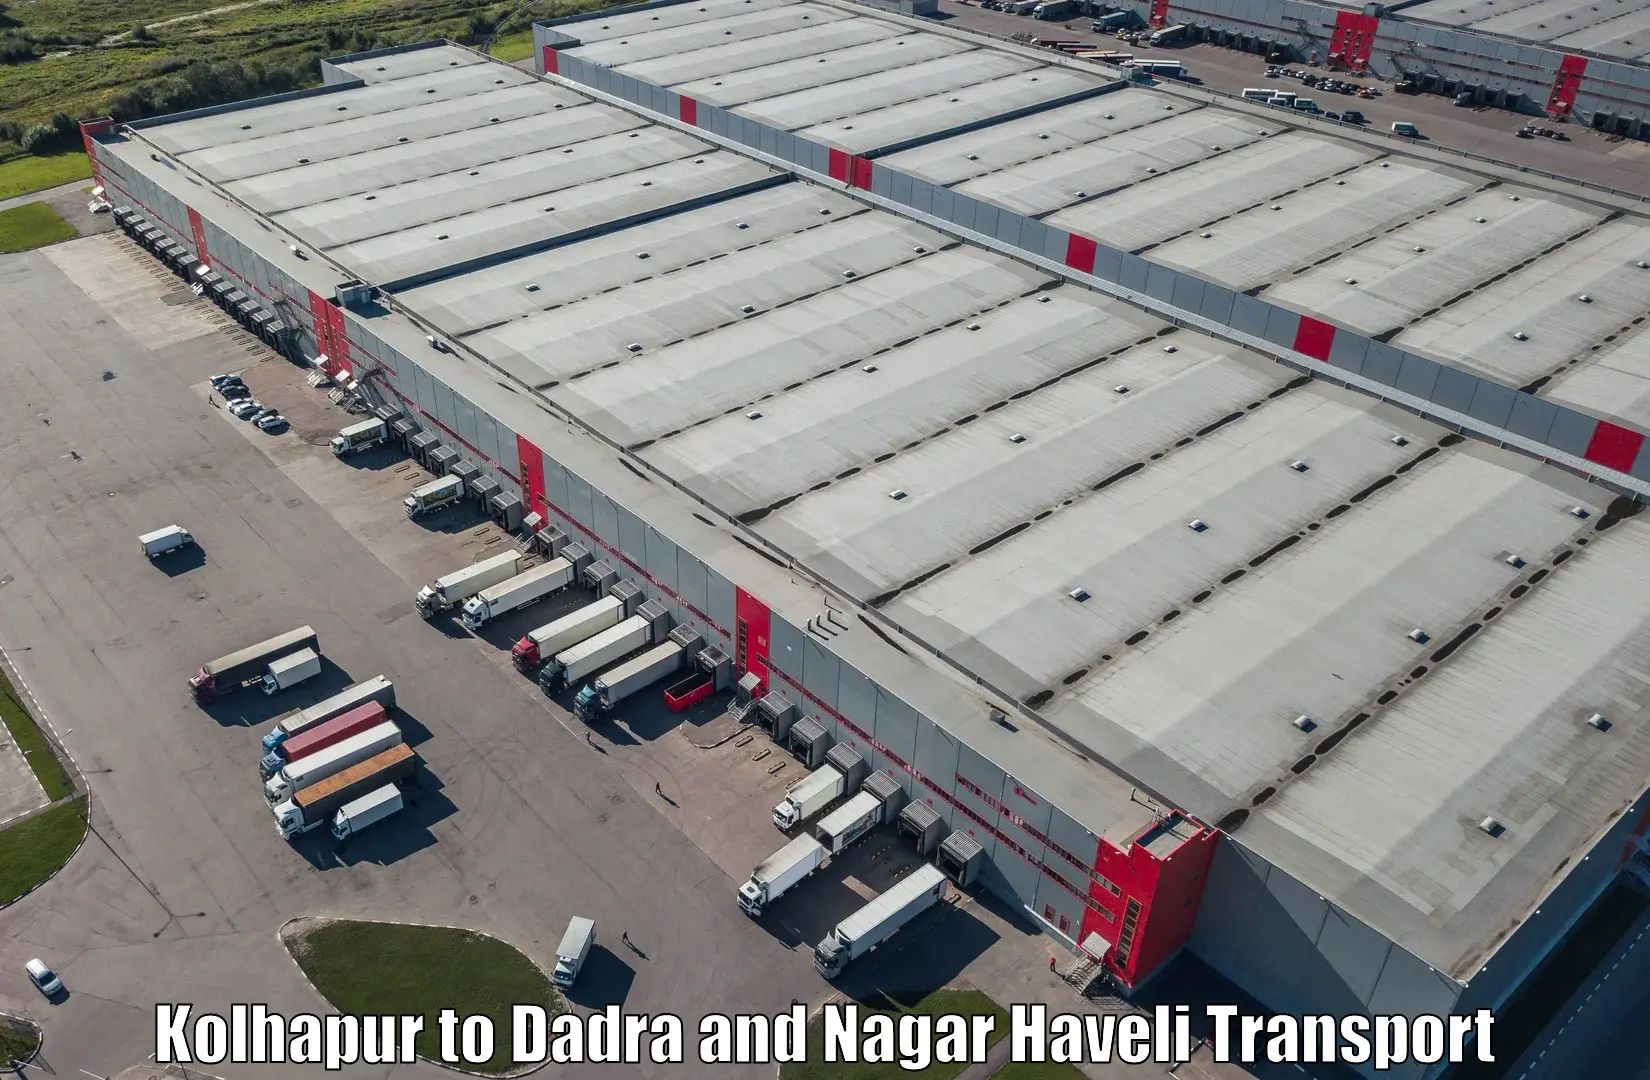 Truck transport companies in India Kolhapur to Silvassa